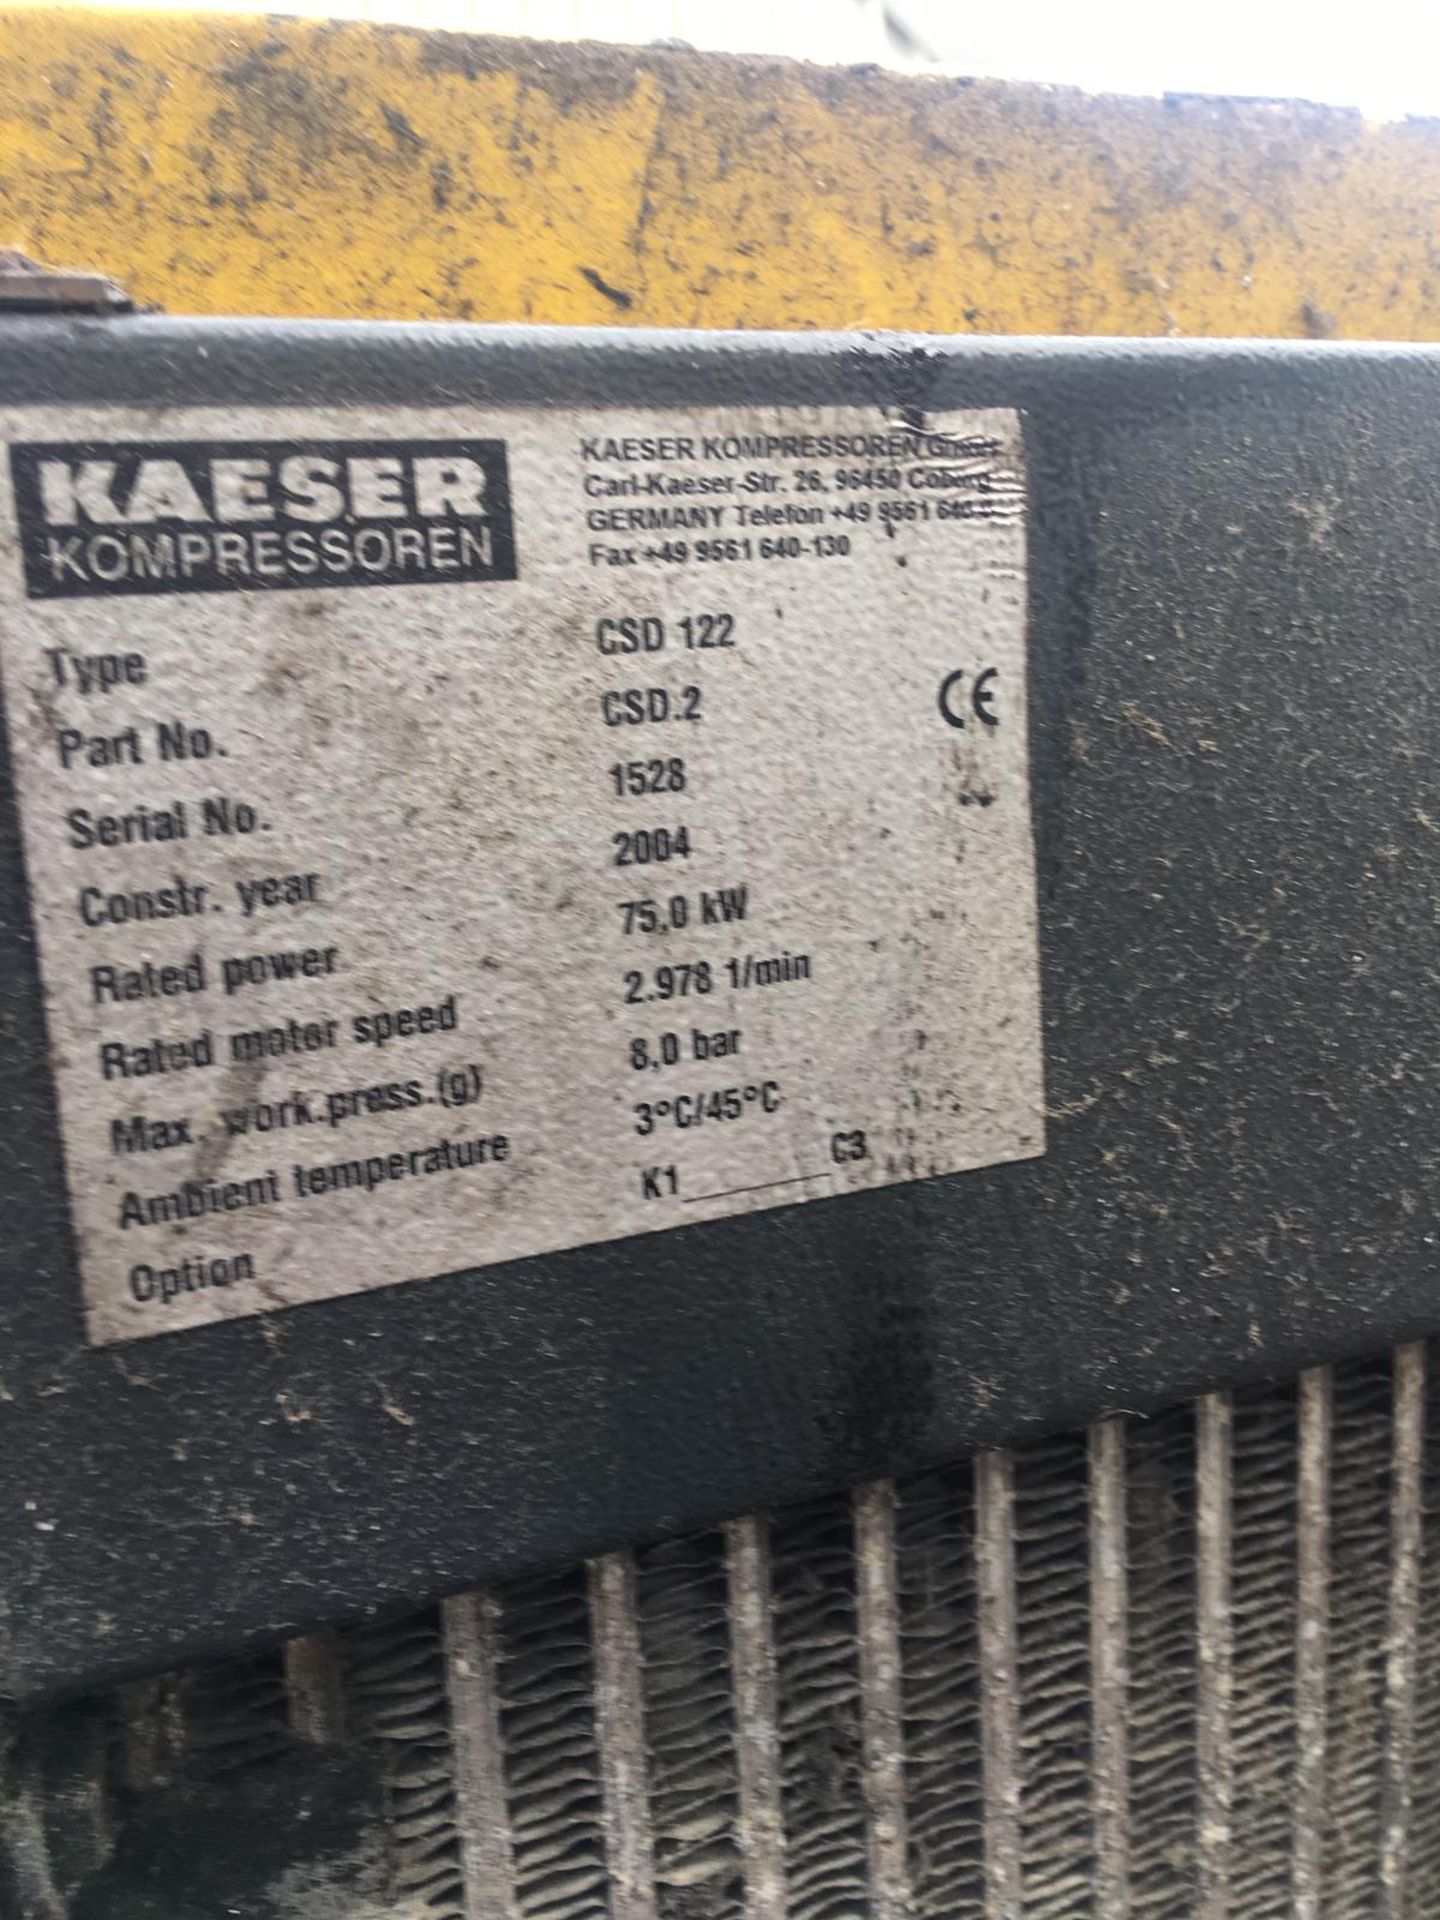 2004 KAESER CSD 122 HPC PULSAIR COMPRESSOR, RATED POWER: 75.0 KW, WORK PRESS 8.0 BAR *NO VAT* - Image 6 of 12